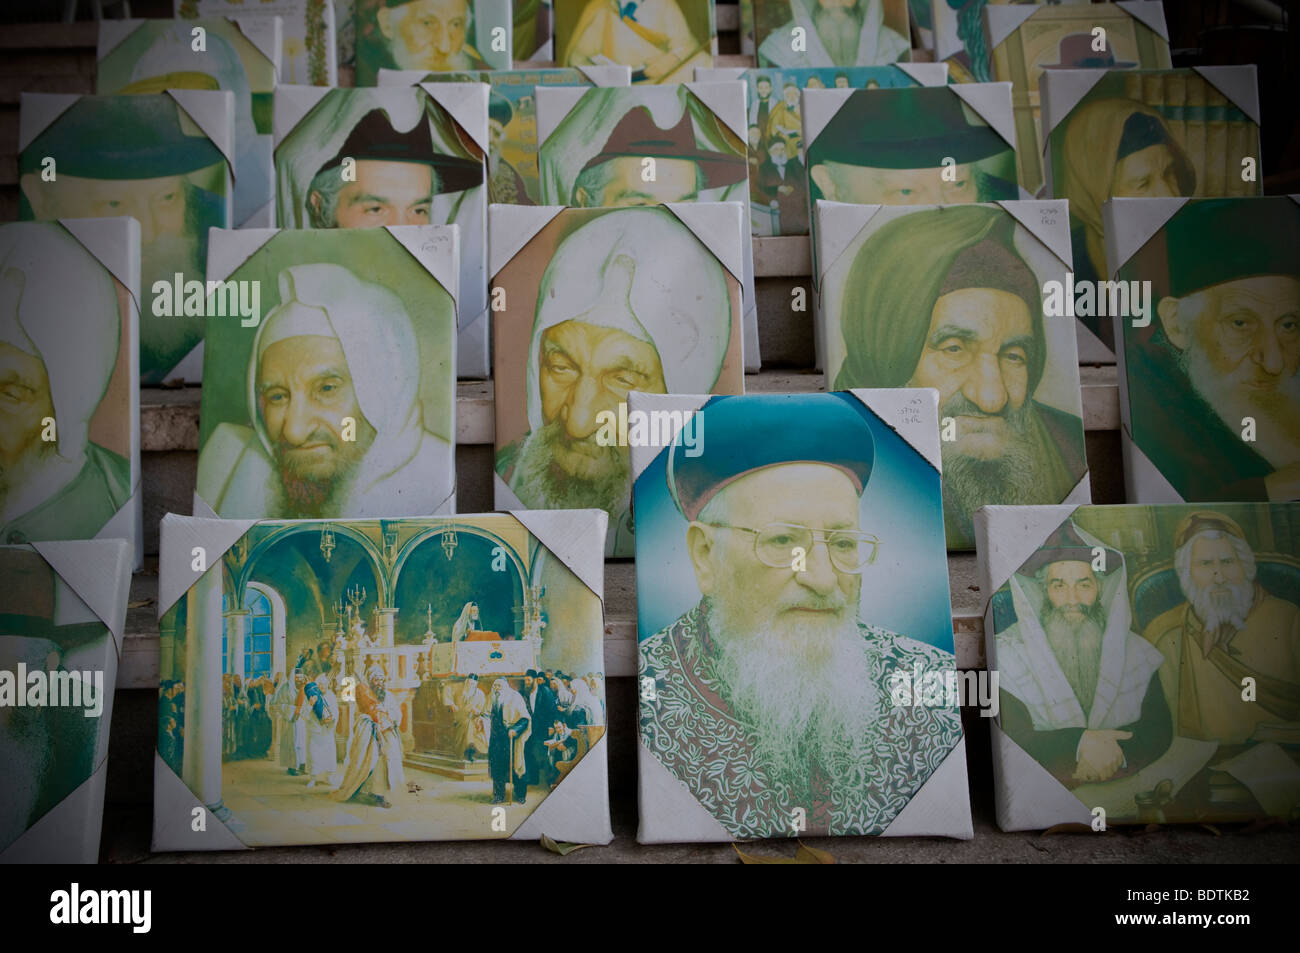 Peinture Portrait de dirigeants spirituels juifs marocains à vendre en Israel Banque D'Images